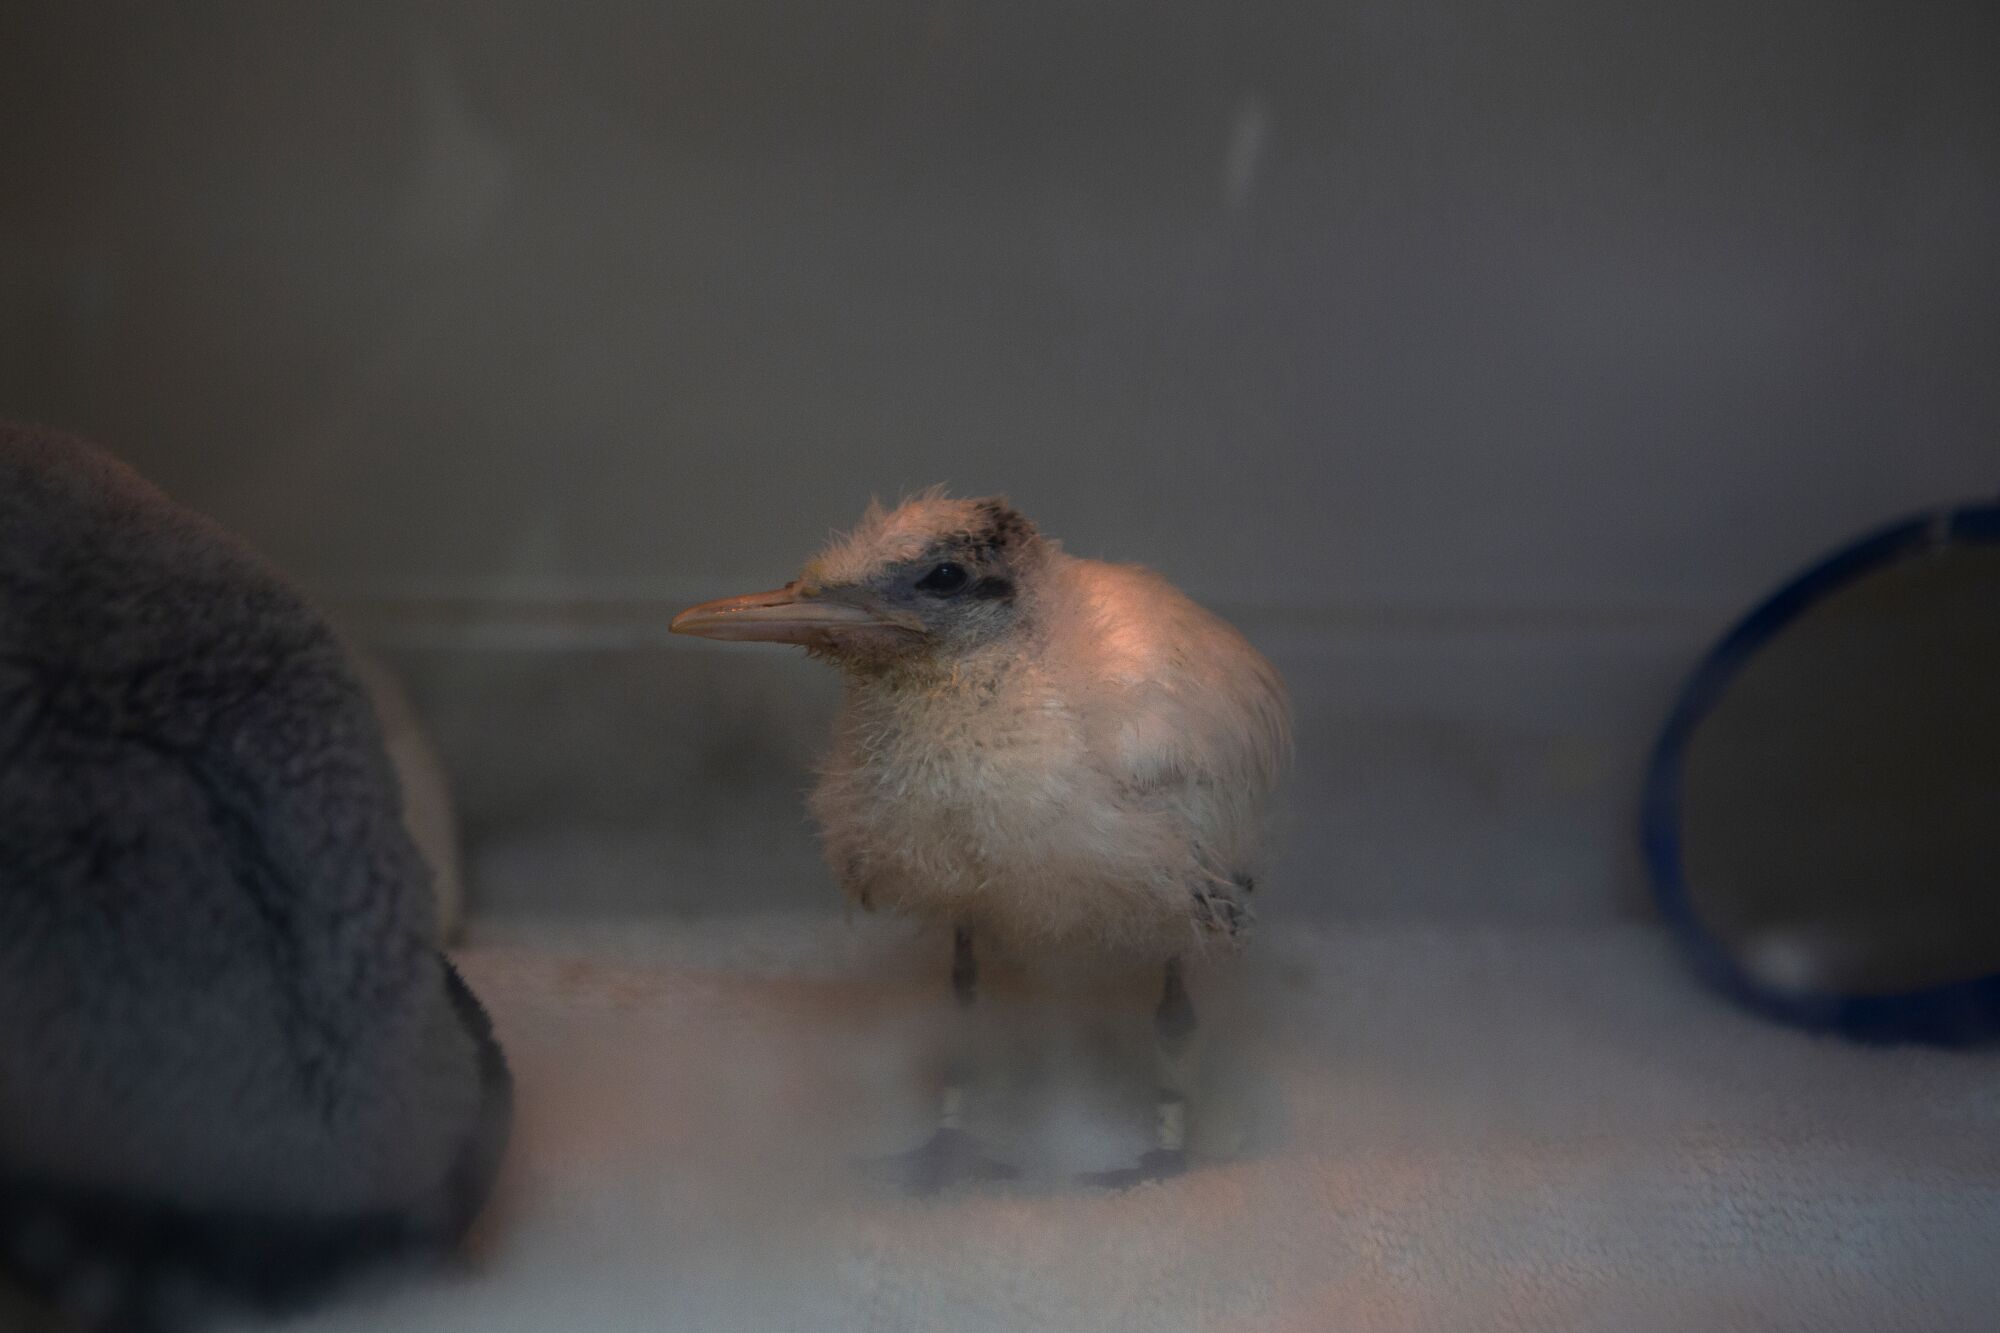 An elegant tern called "Little Mike" sits inside an incubator.